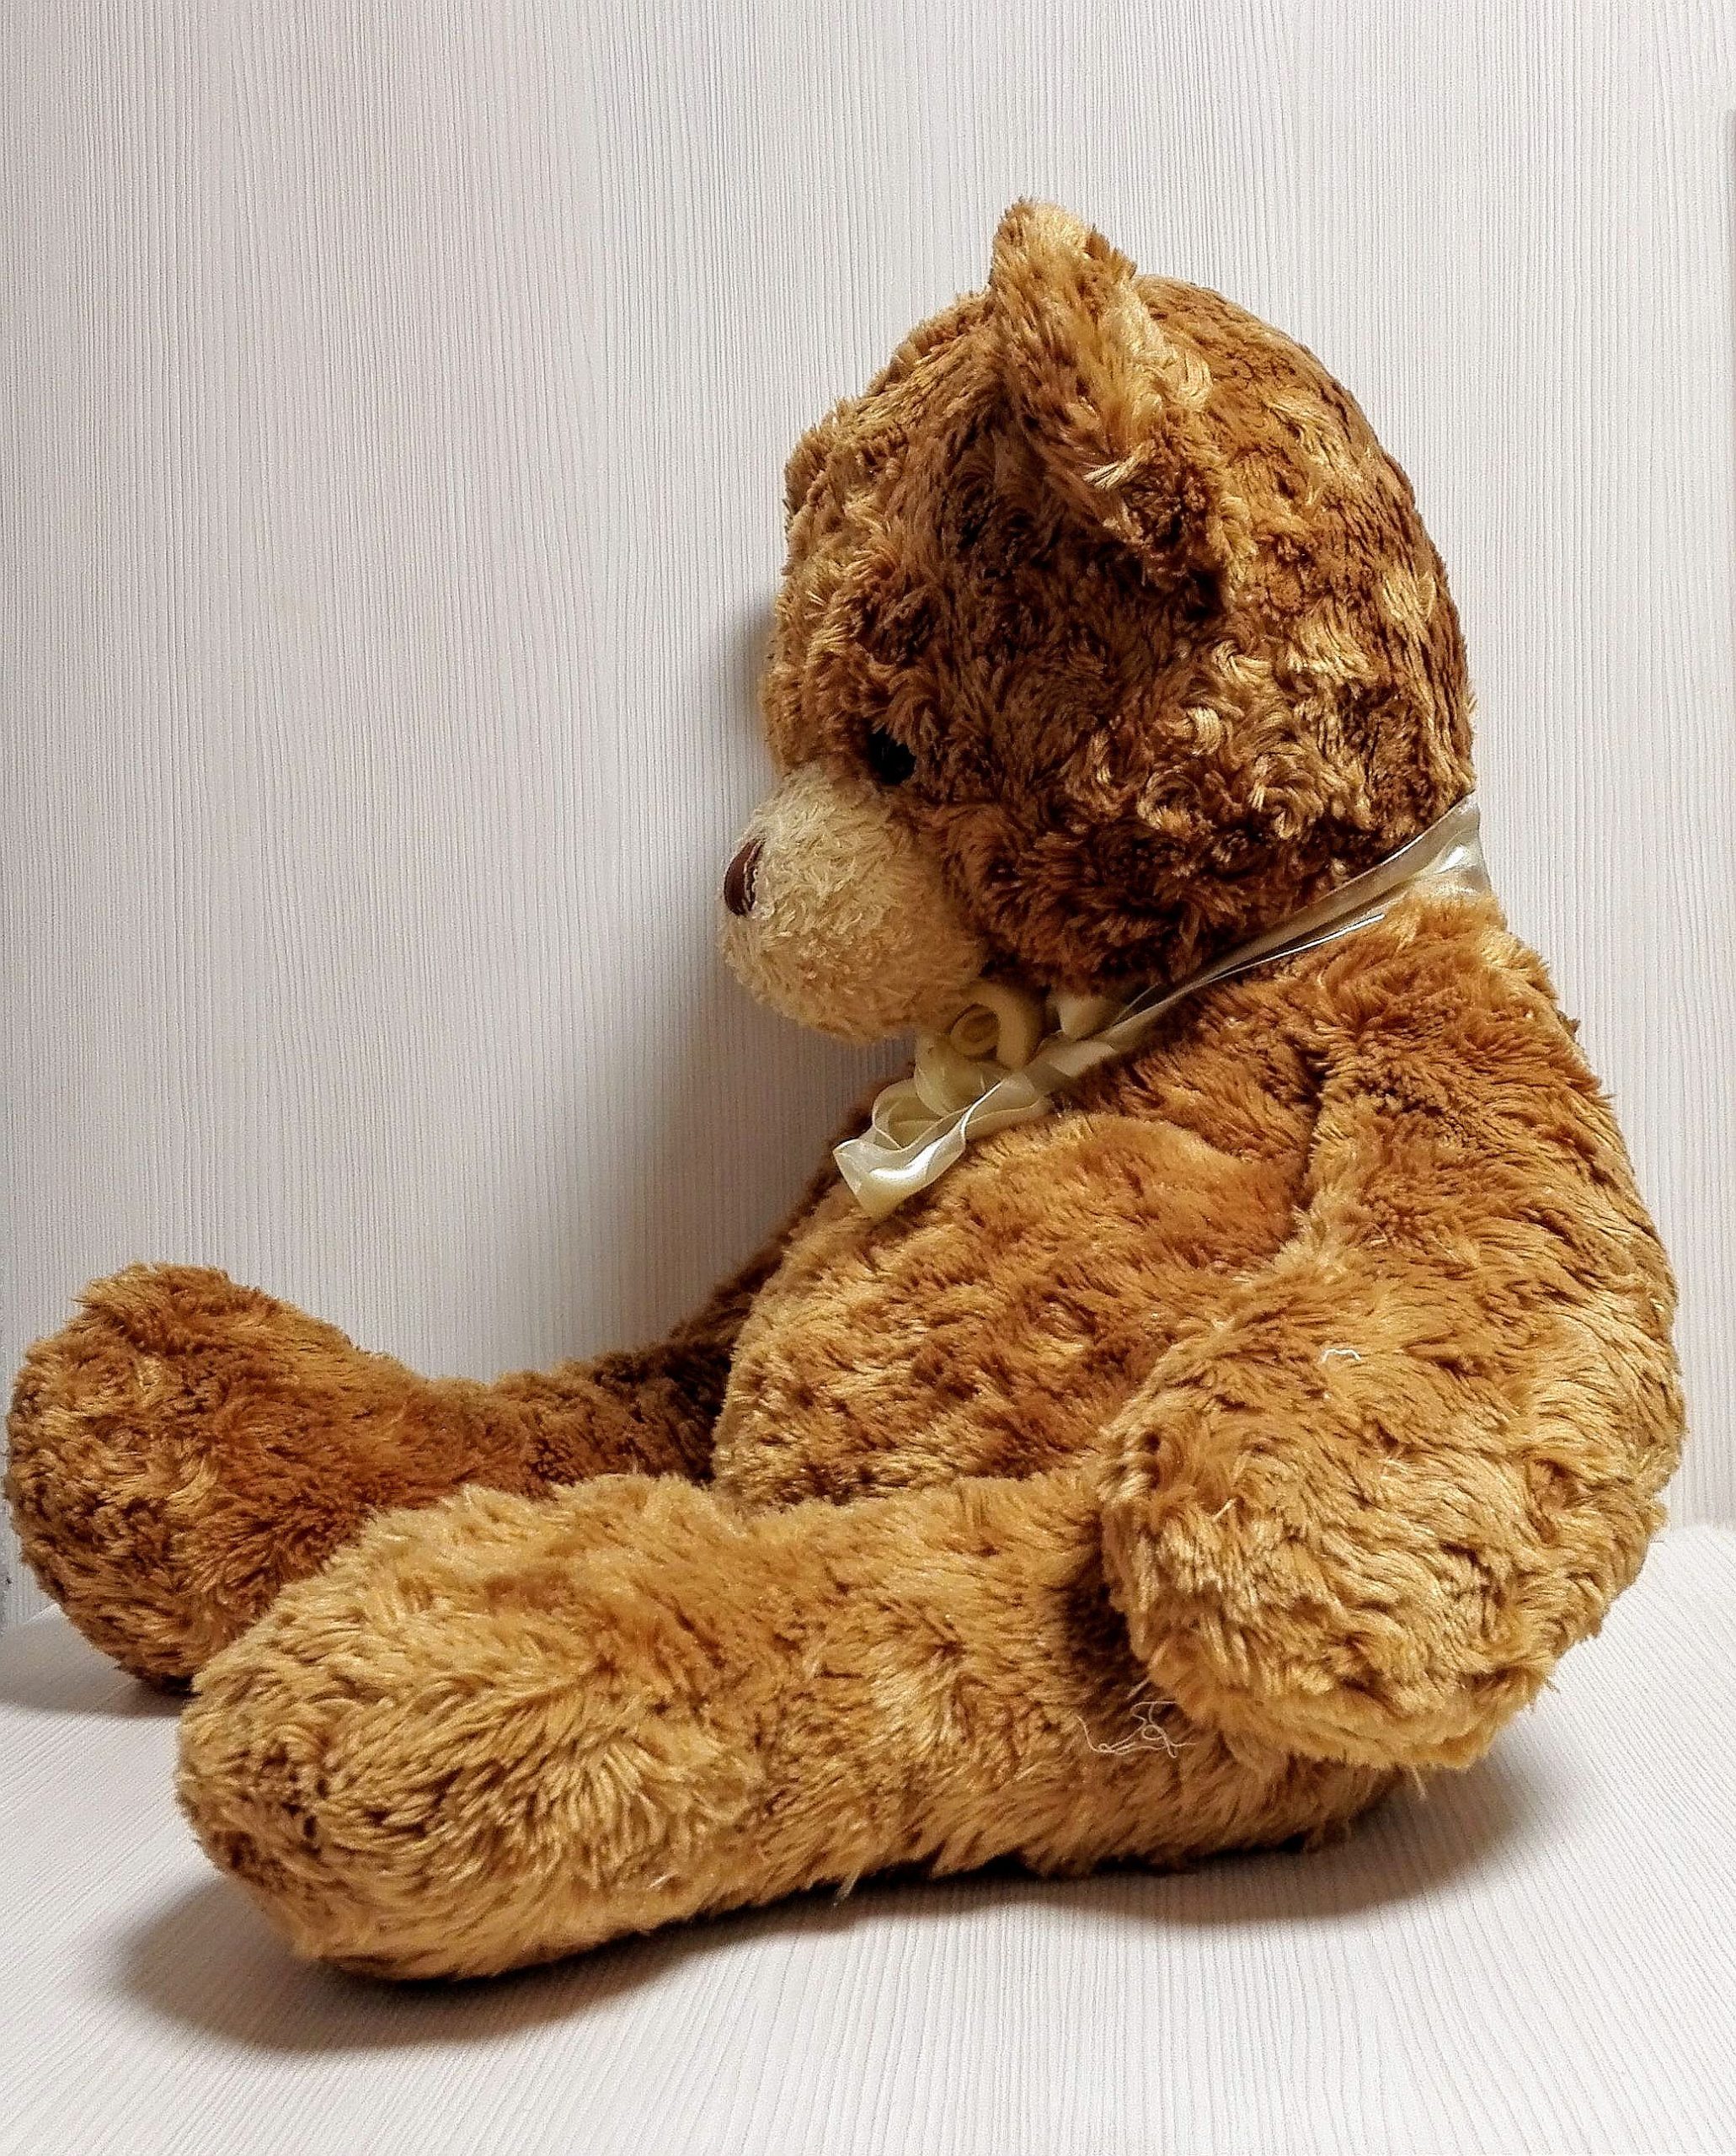 Vintage Collectible Toy Stuffed Animal Rare Teddy Bear Plush 